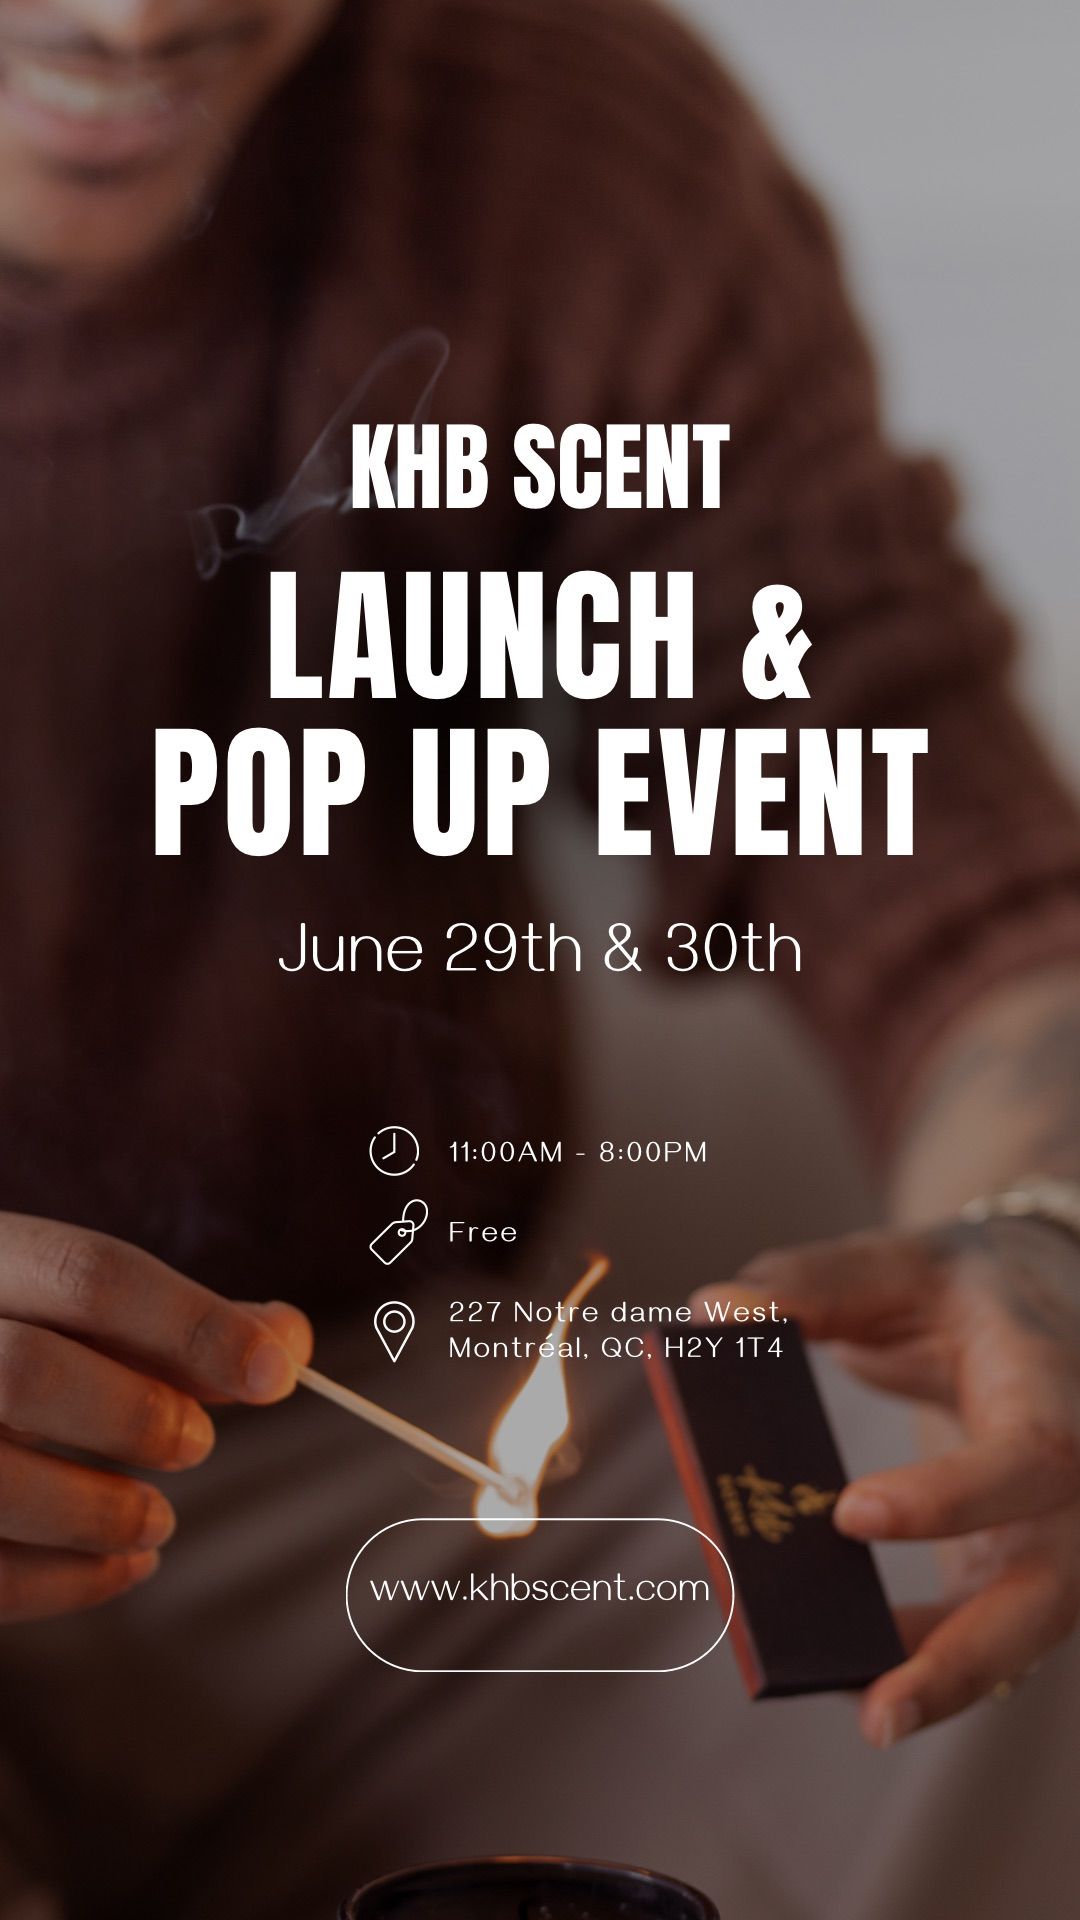 Launch & Pop up event